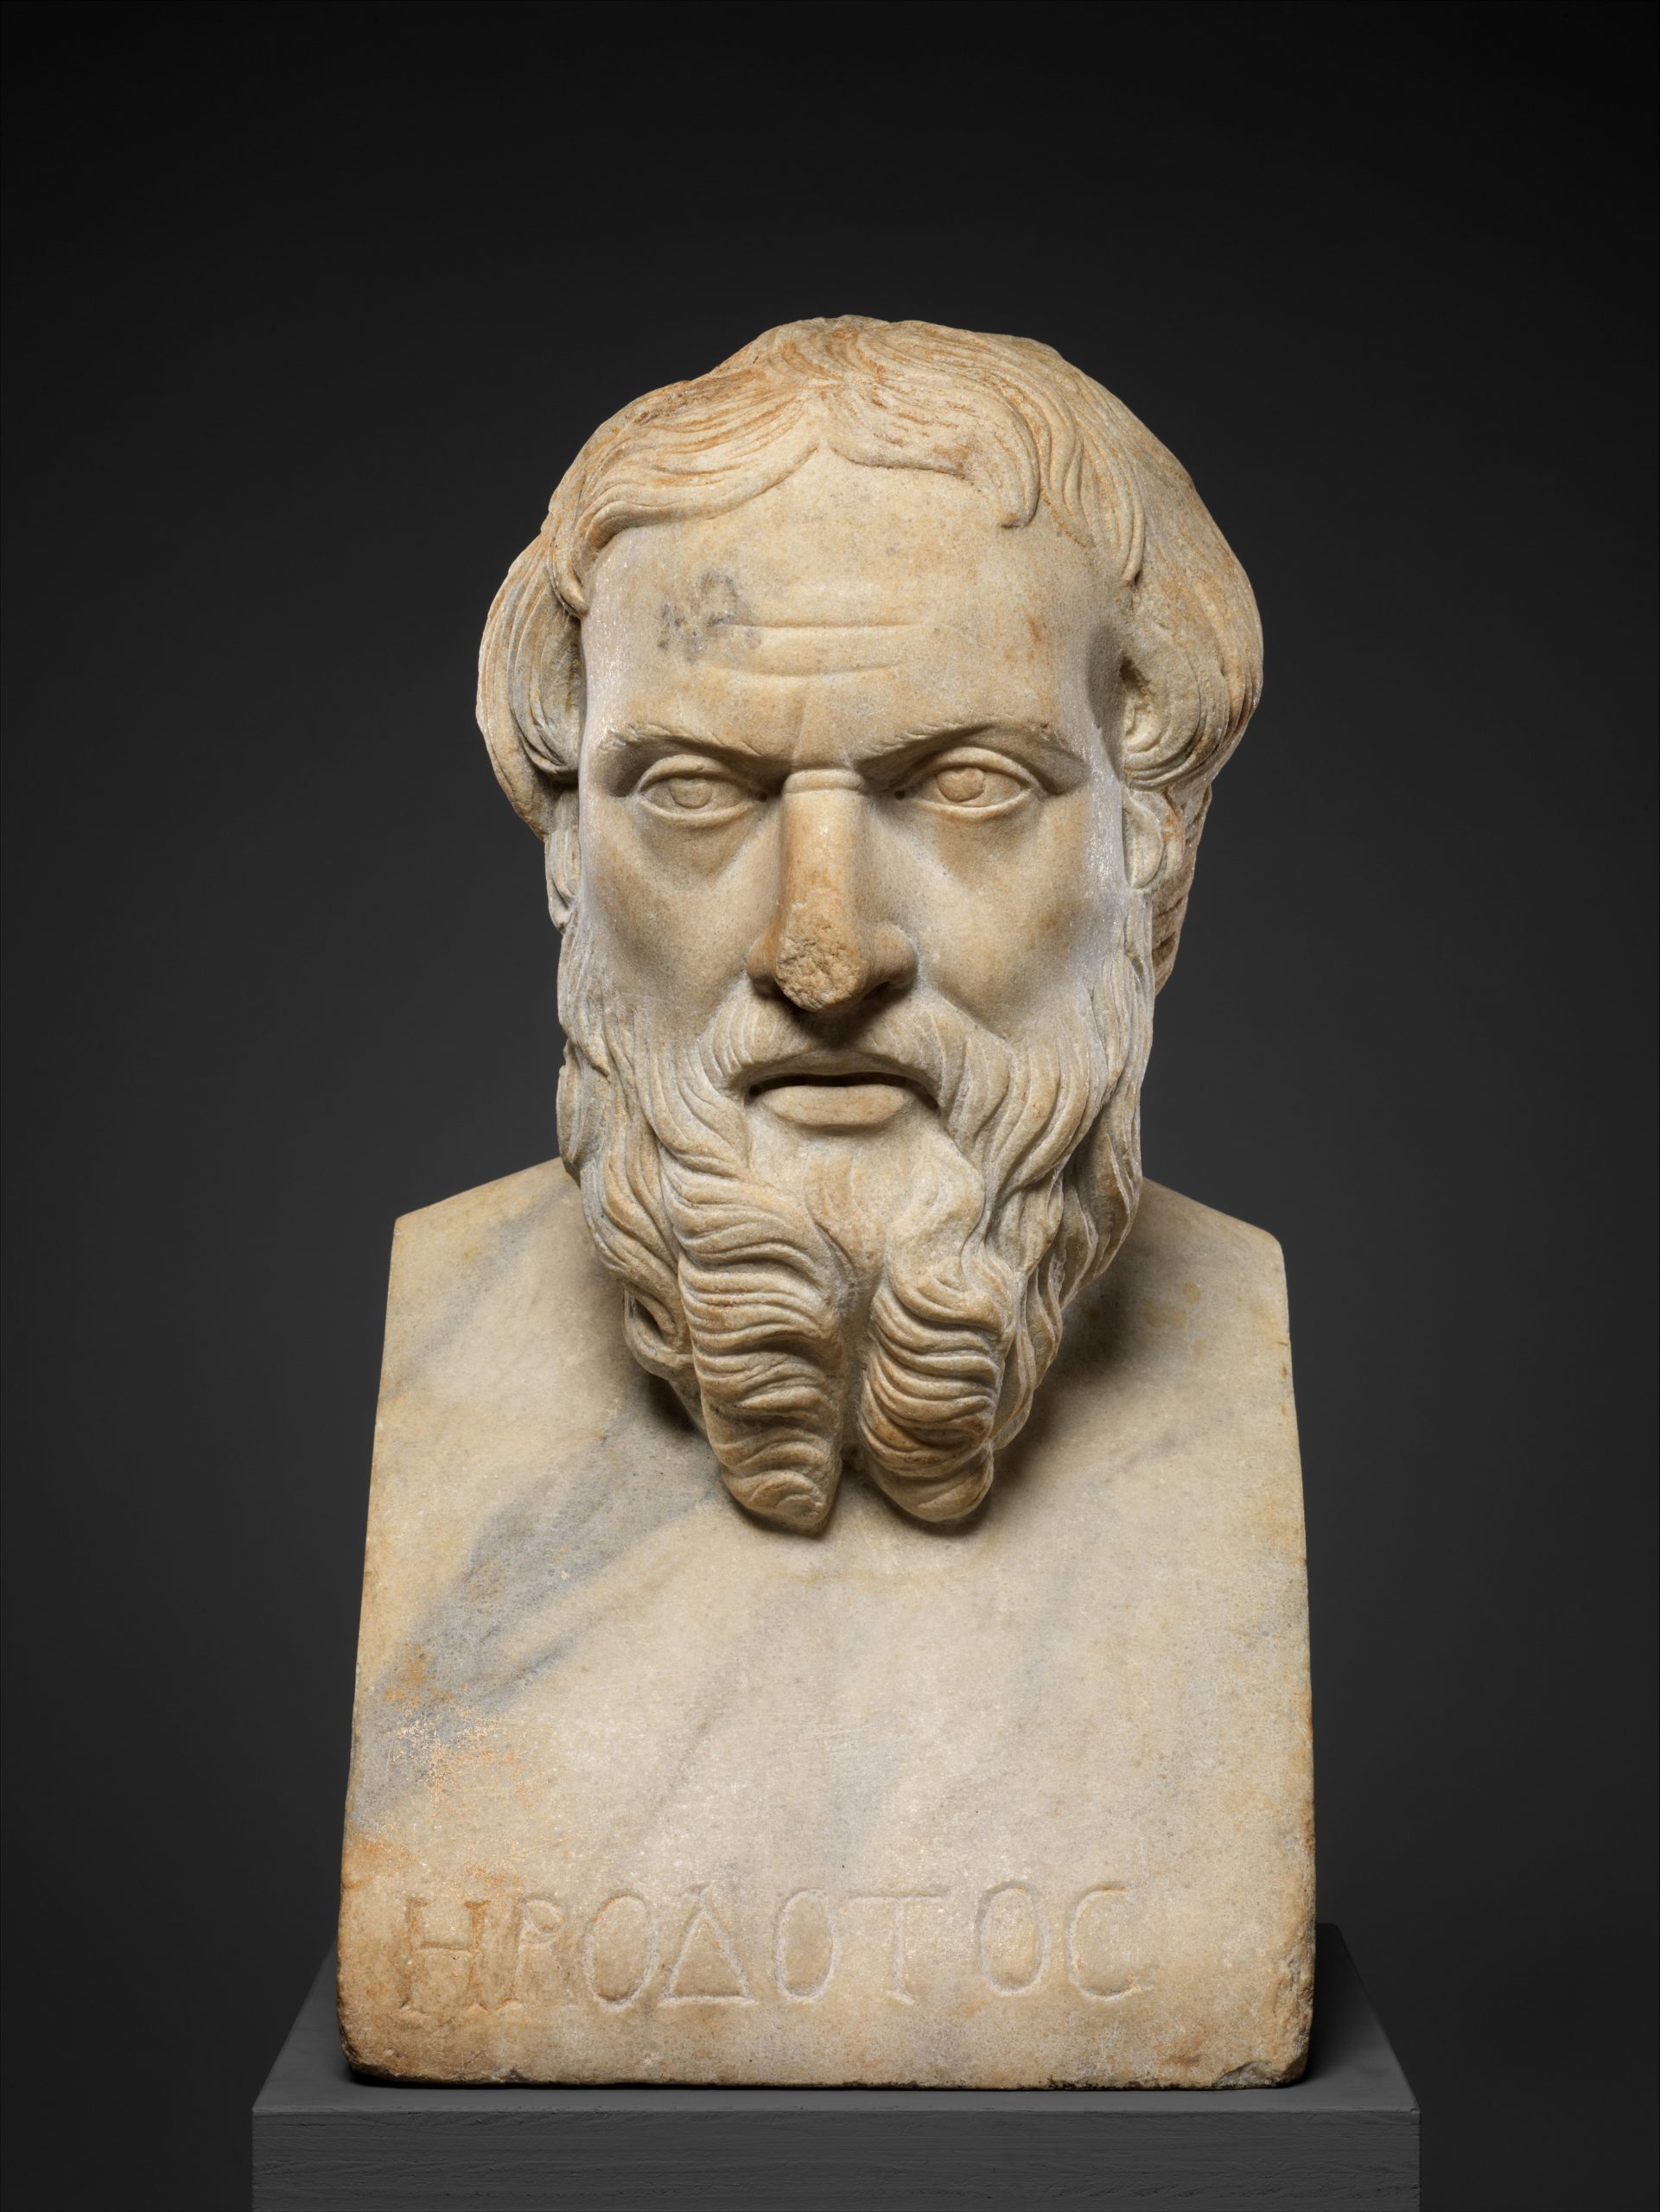 Robert Erickson & James Panero discuss Herodotus & more